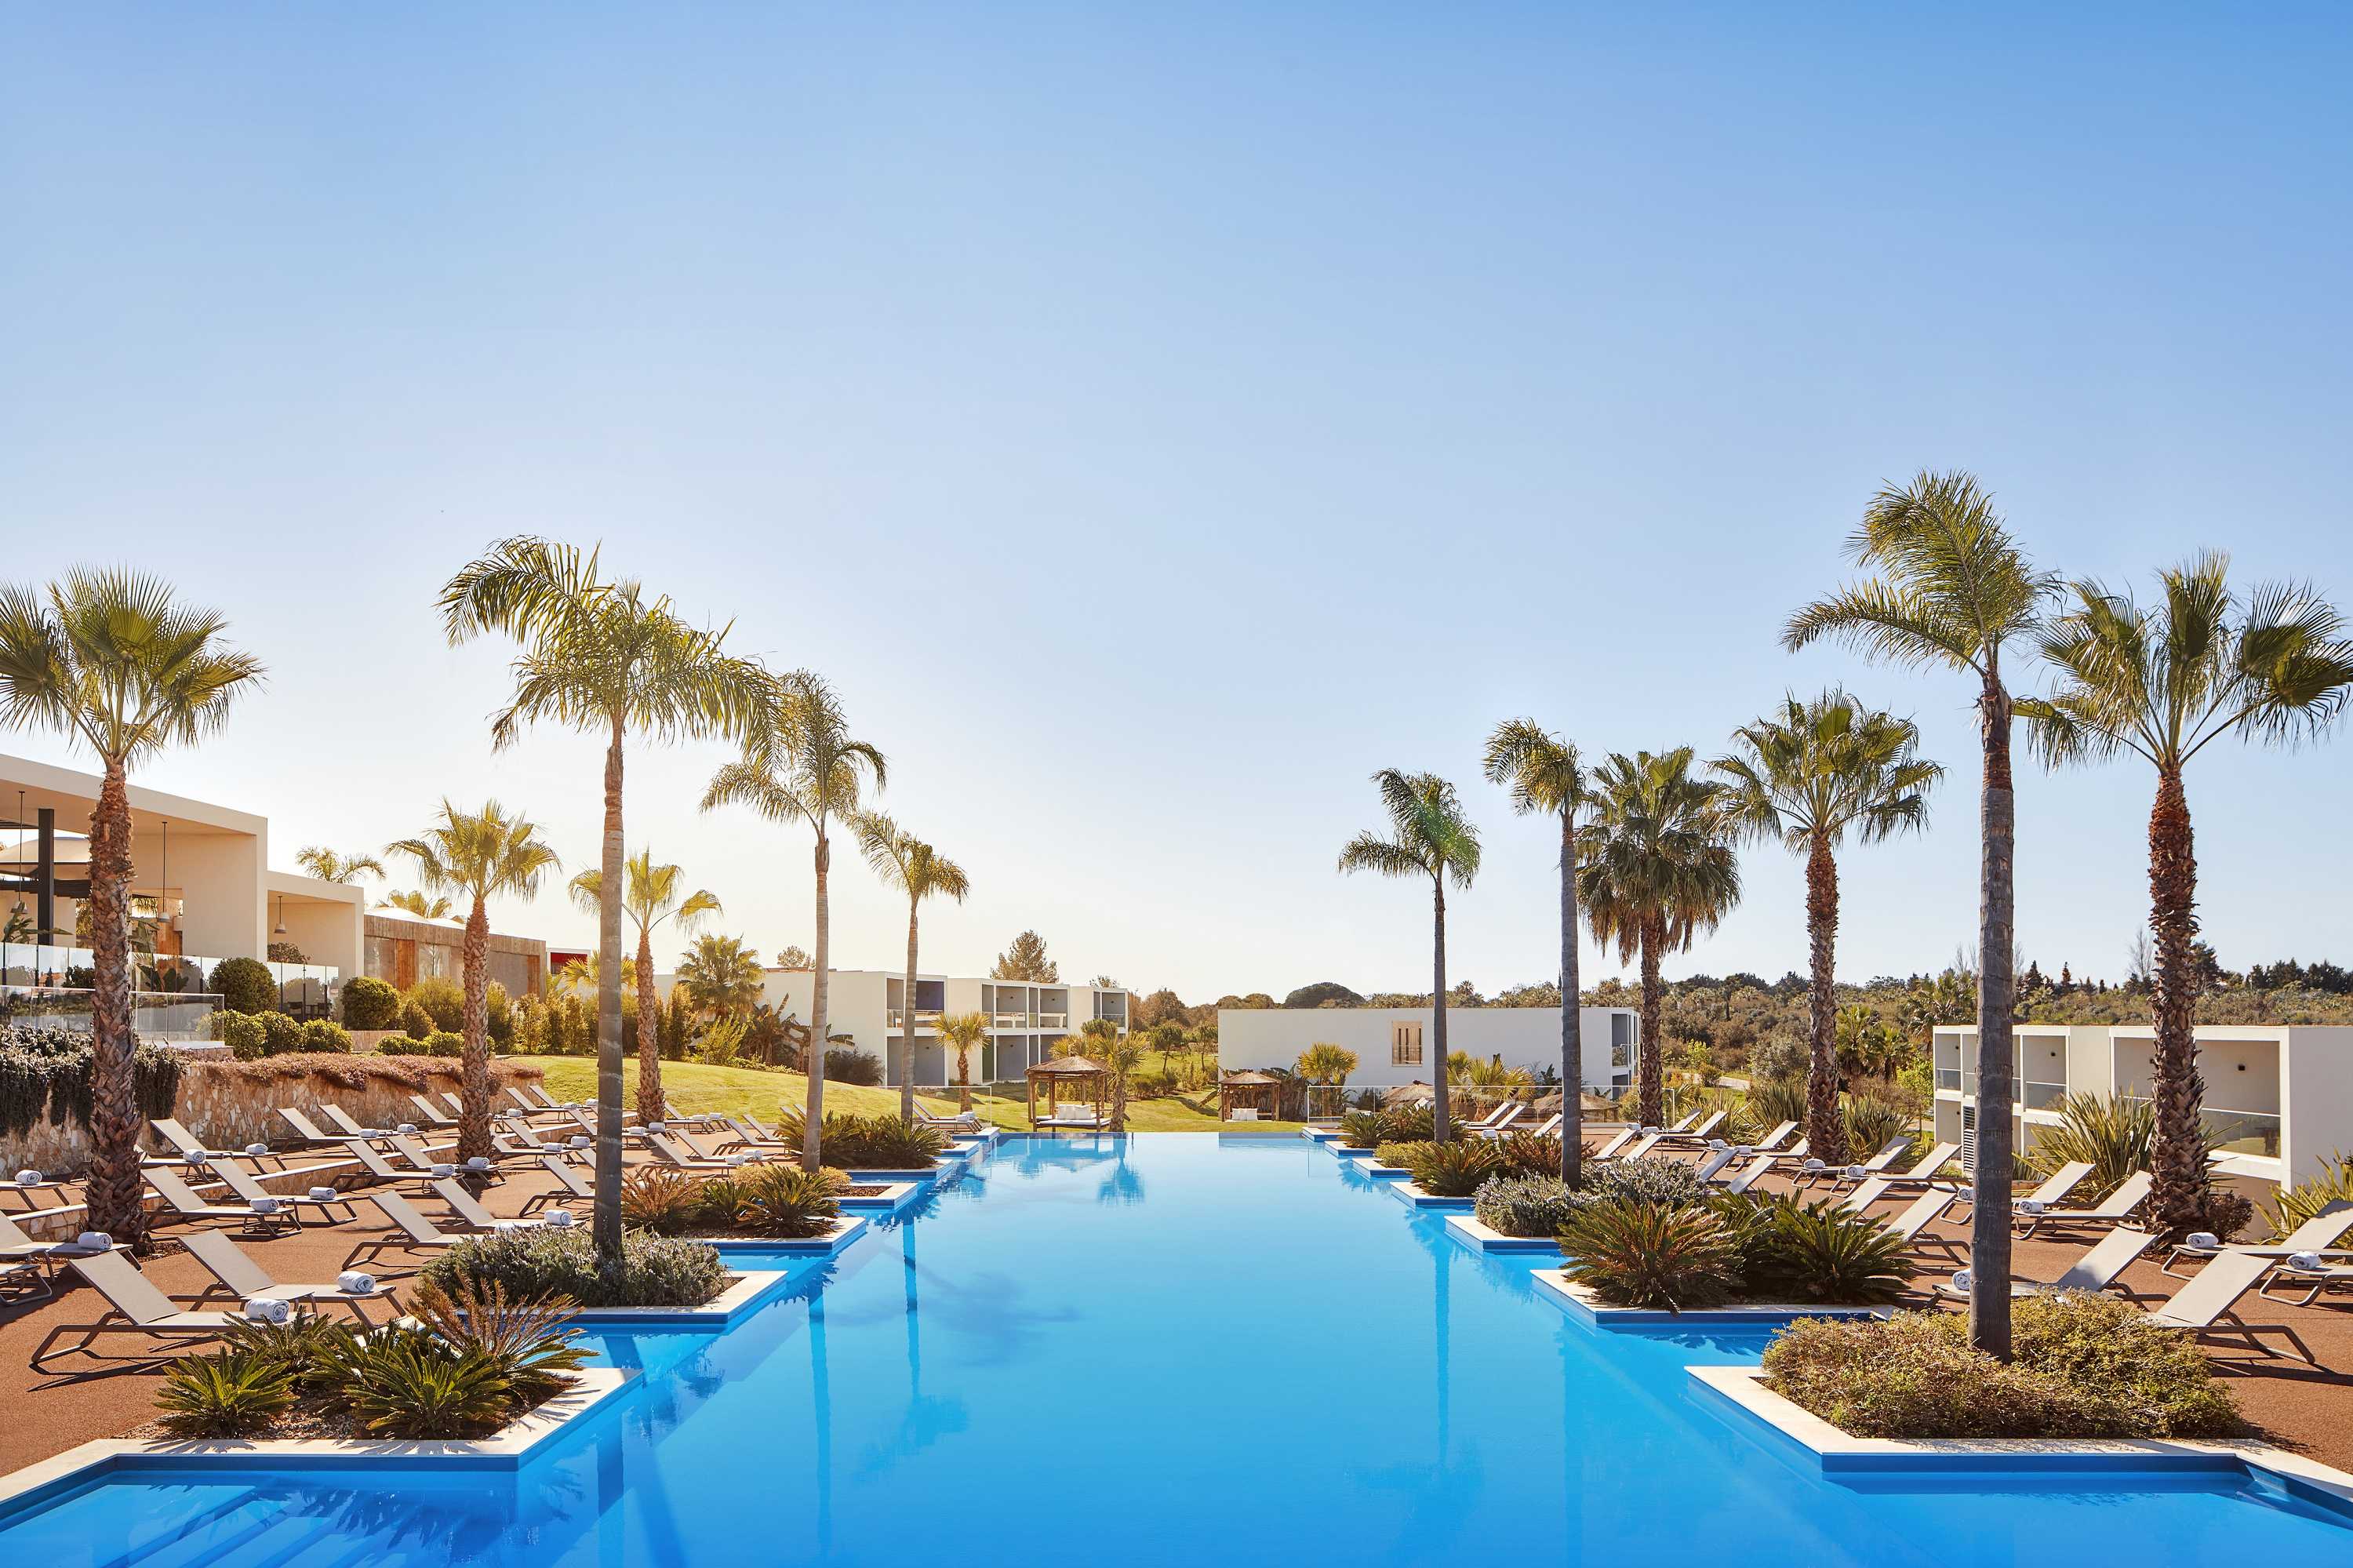 Tivoli Alvor Algarve – All Inclusive Resort